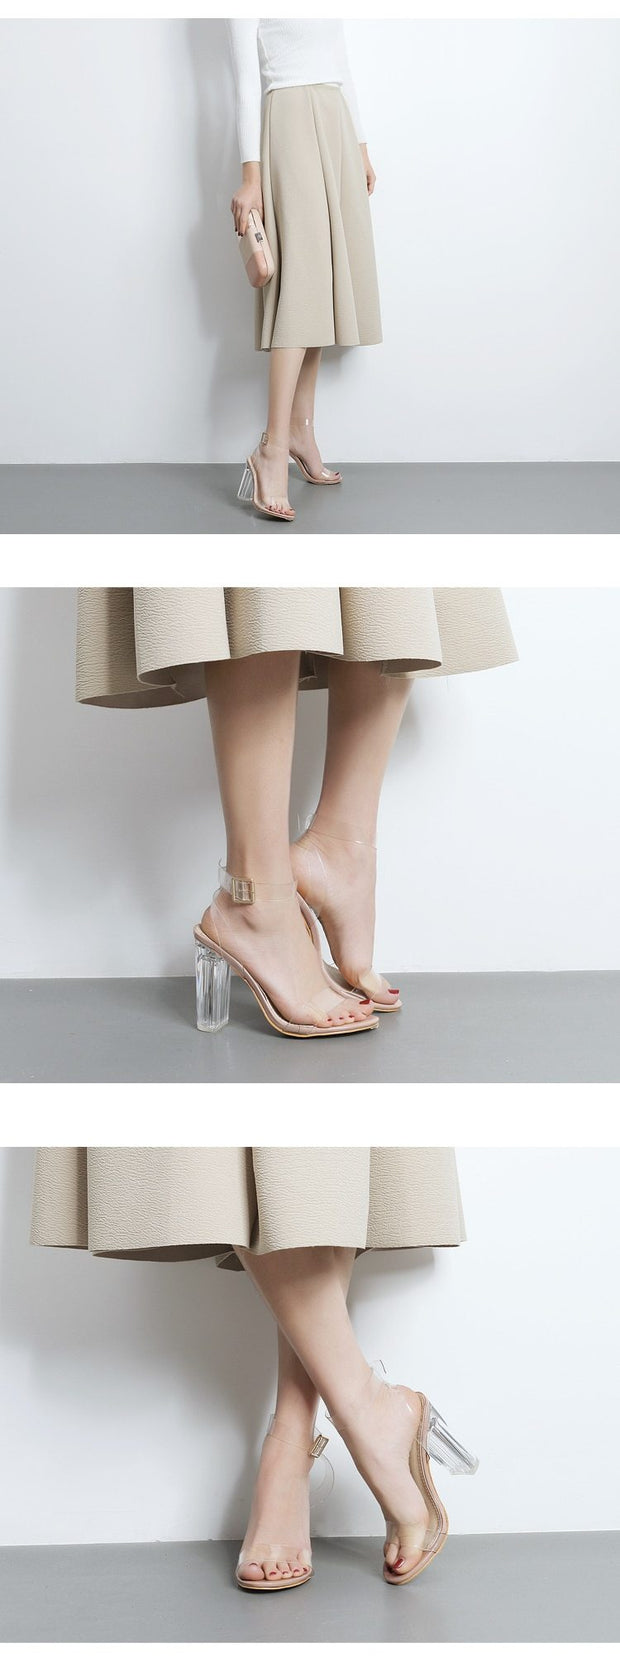 PVC Jelly Sandals Crystal Leopard Open Toed High Heels Women Transparent Heel Sandals Slippers Pumps 11CM - Ernadi